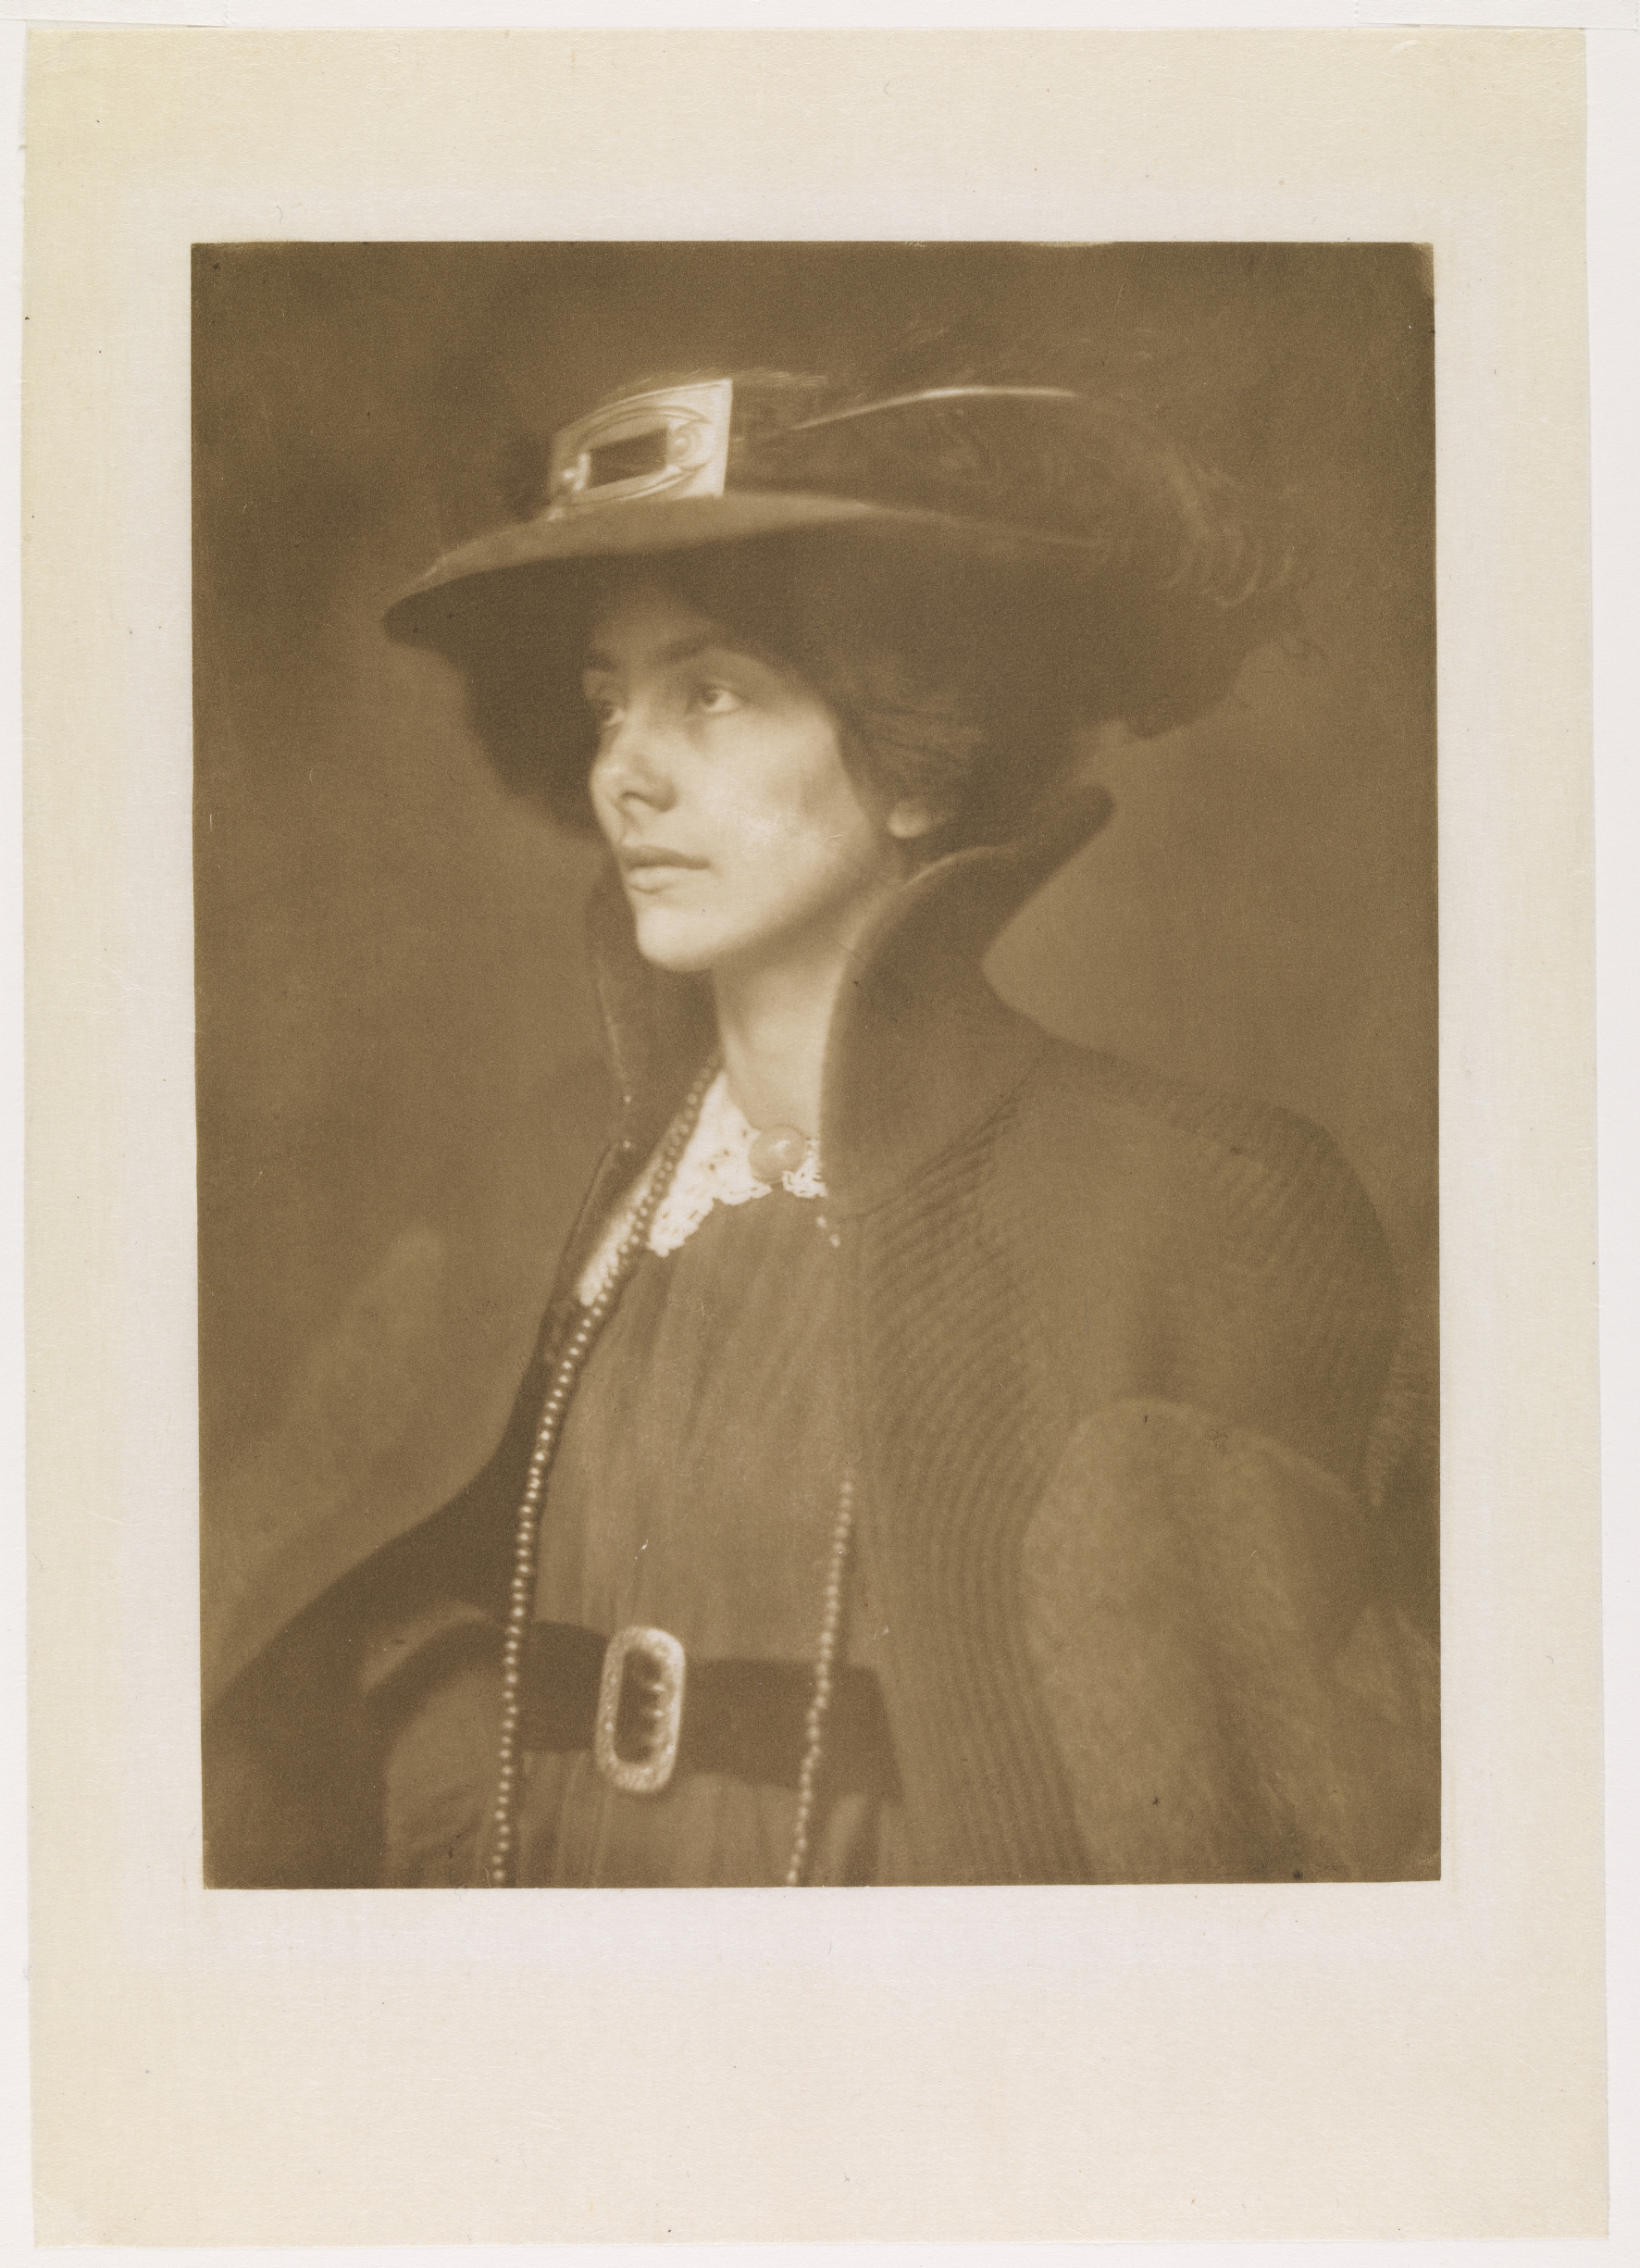 Photogravure portrait of Frau Muthesius by James Craig Annan